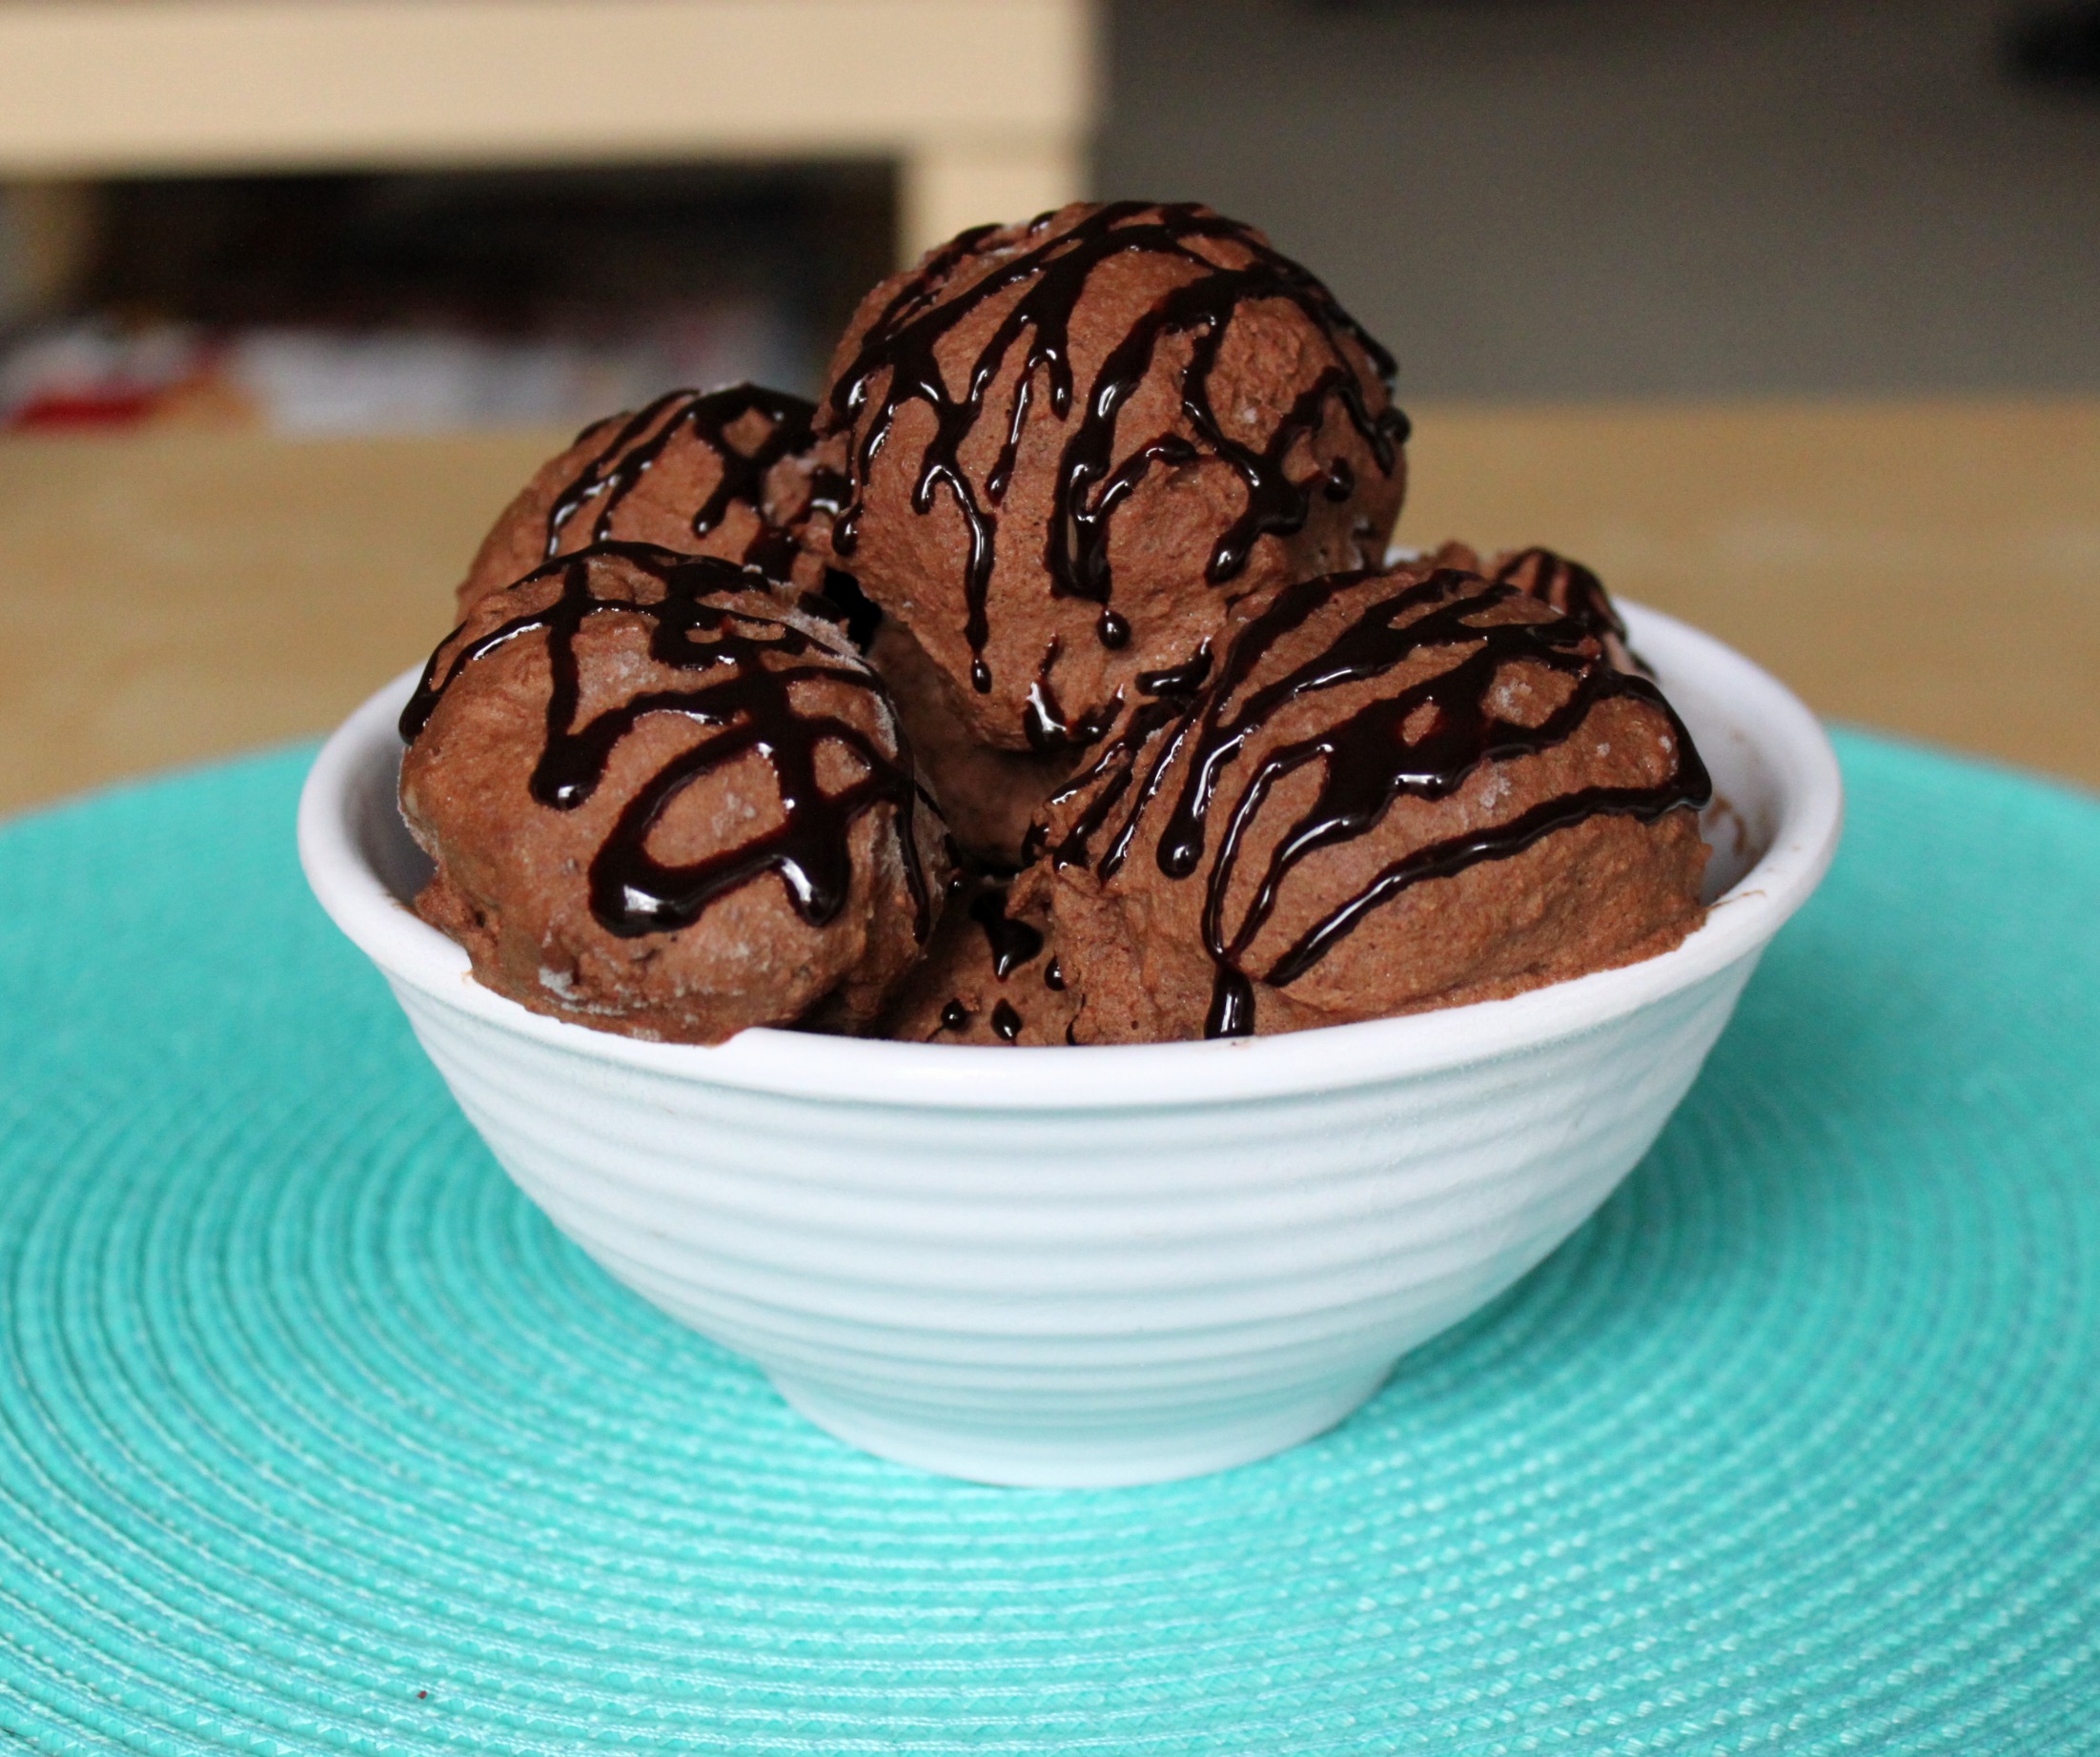 http://www.52kitchenadventures.com/wp-content/uploads/2011/03/Banana-chocolate-ice-cream-with-homemade-chocolate-syrup-21.jpg